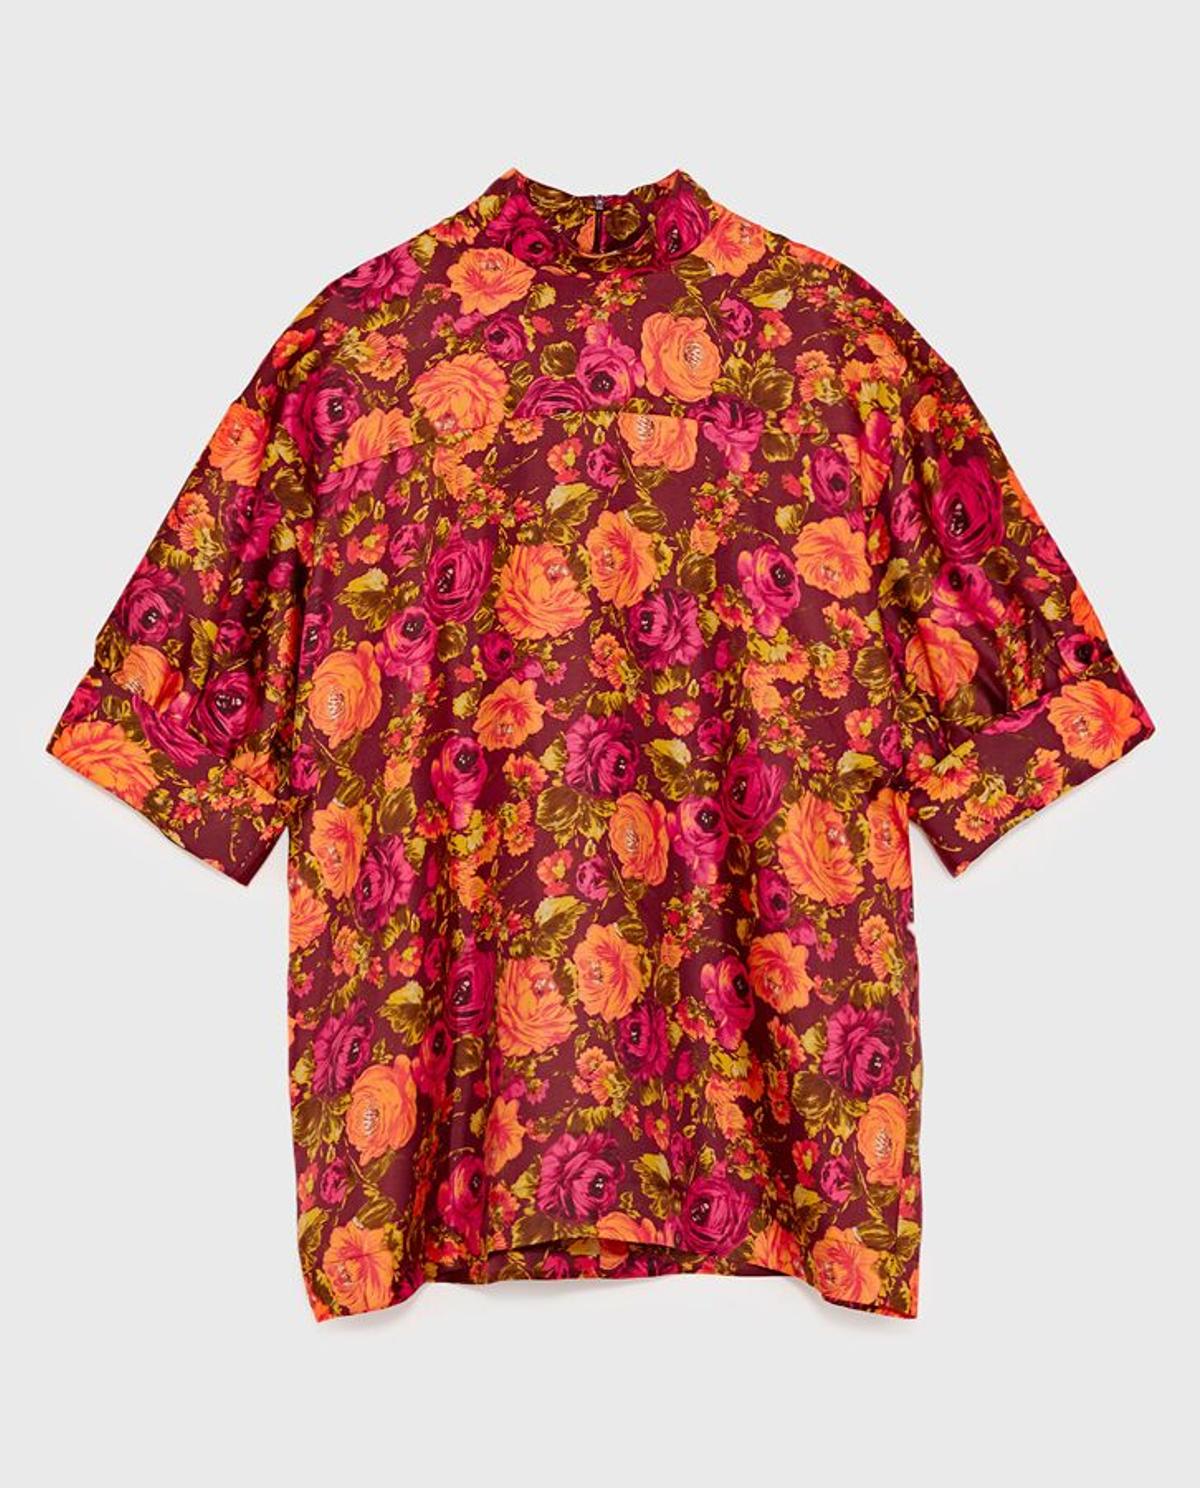 Zara Pre-fall 17: Camisa de seda con volumen